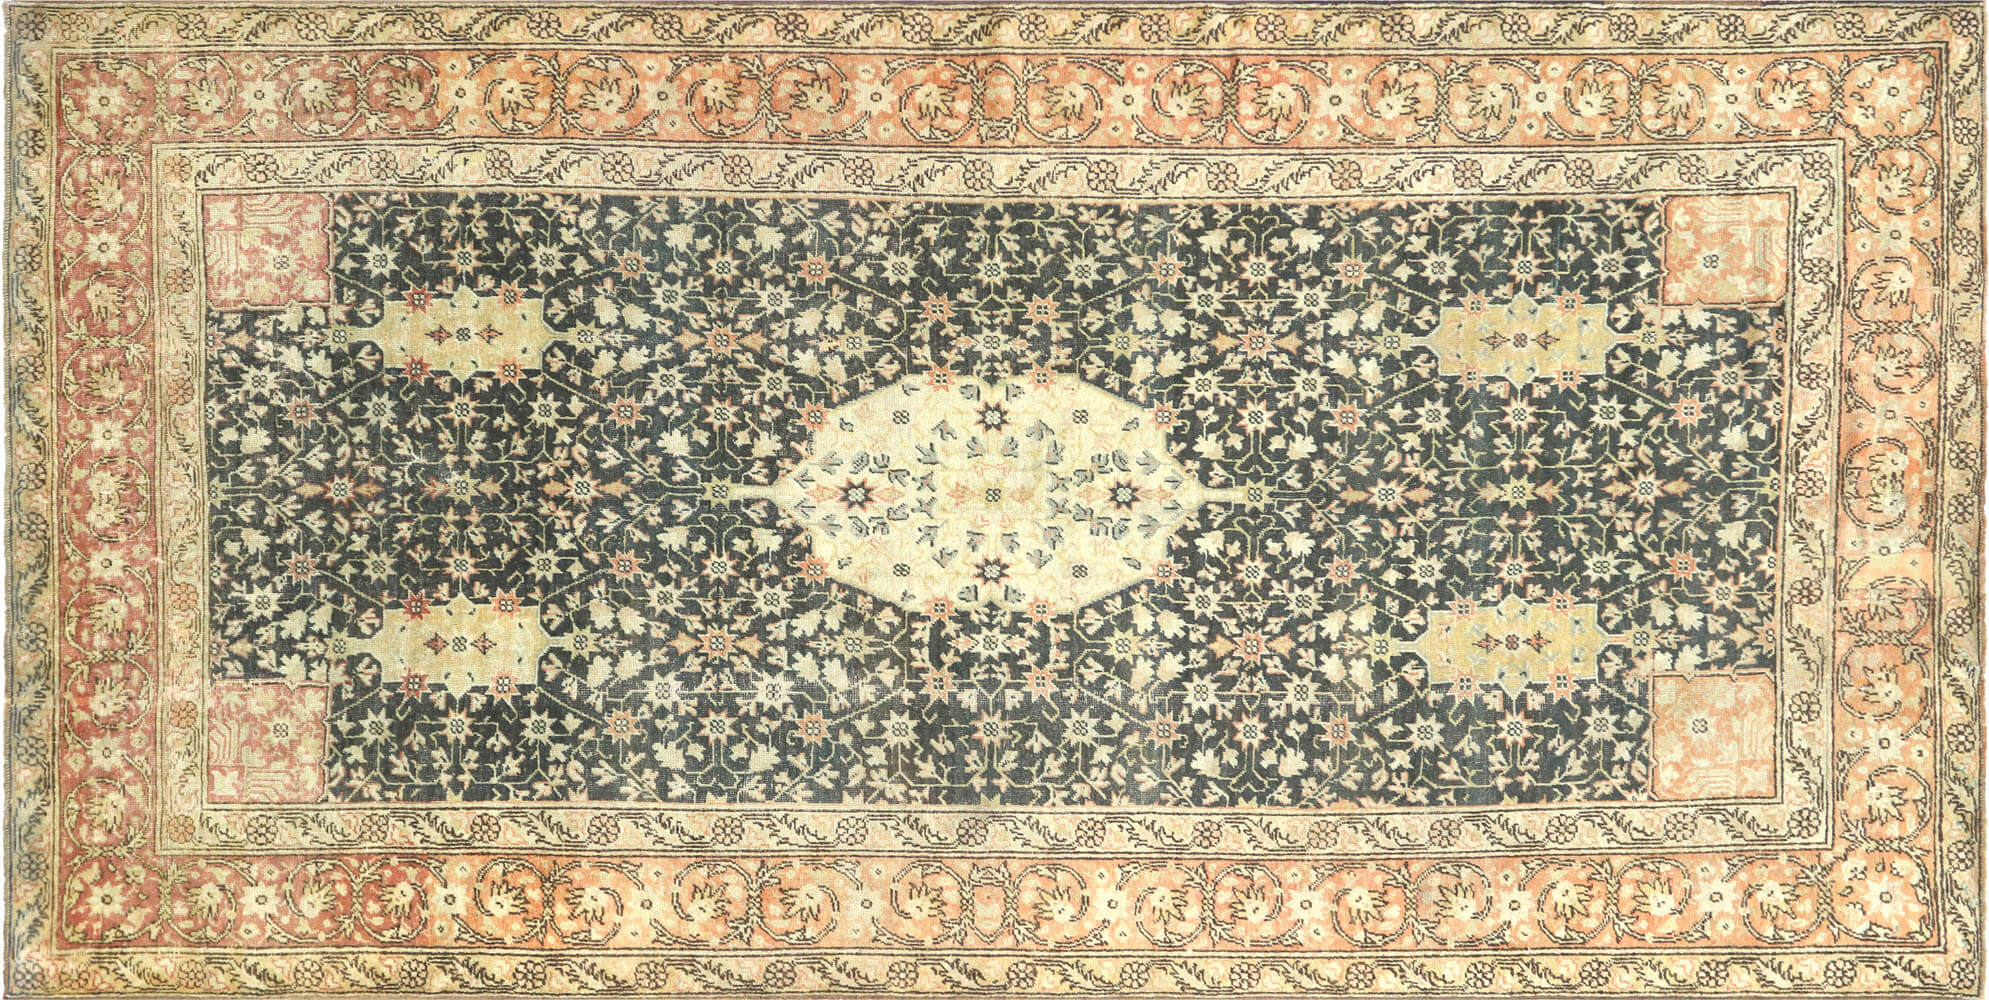 Antique Caucasian Karabagh Carpet - 6'7" x 13'2"